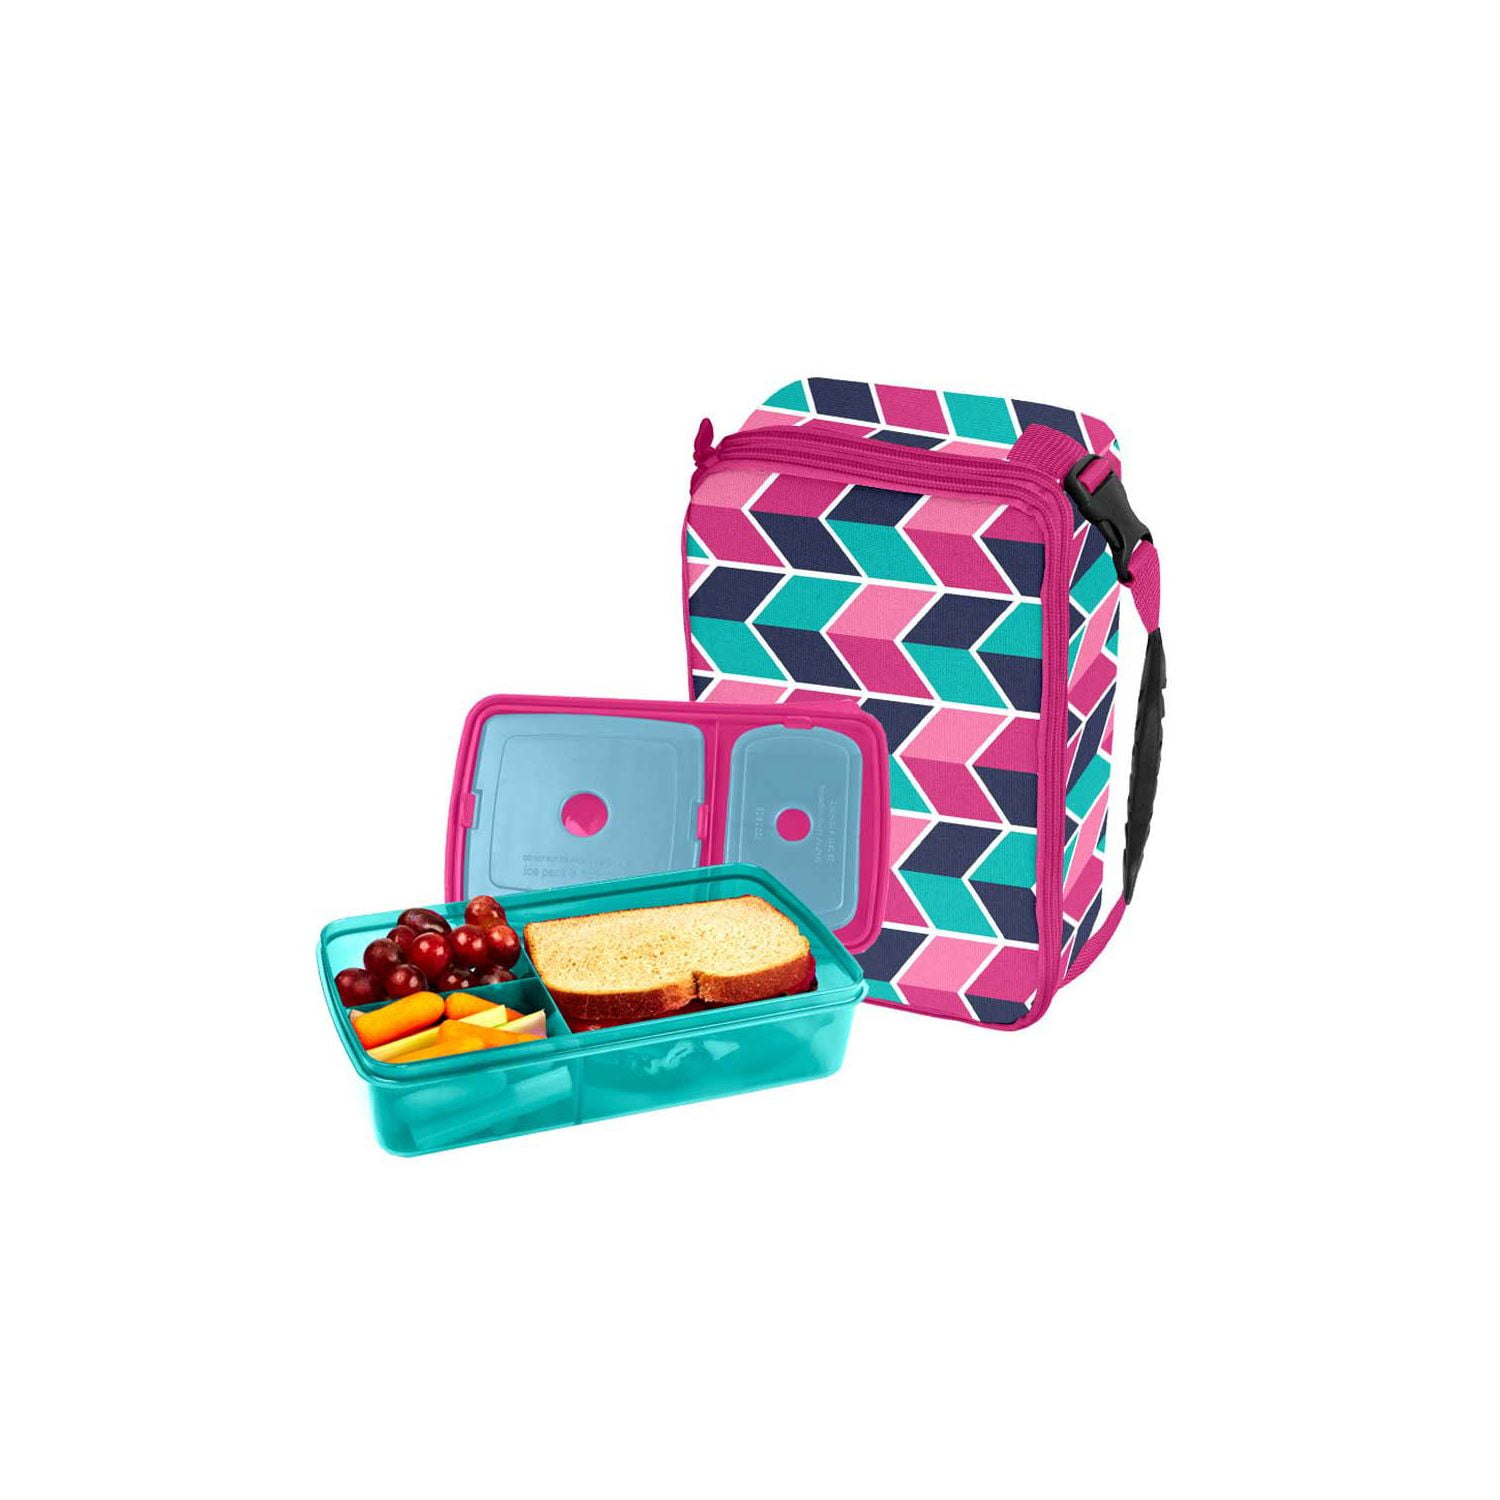 Fit &amp; Fresh Bento Lunch Box in Navy Arrow - Walmart.com